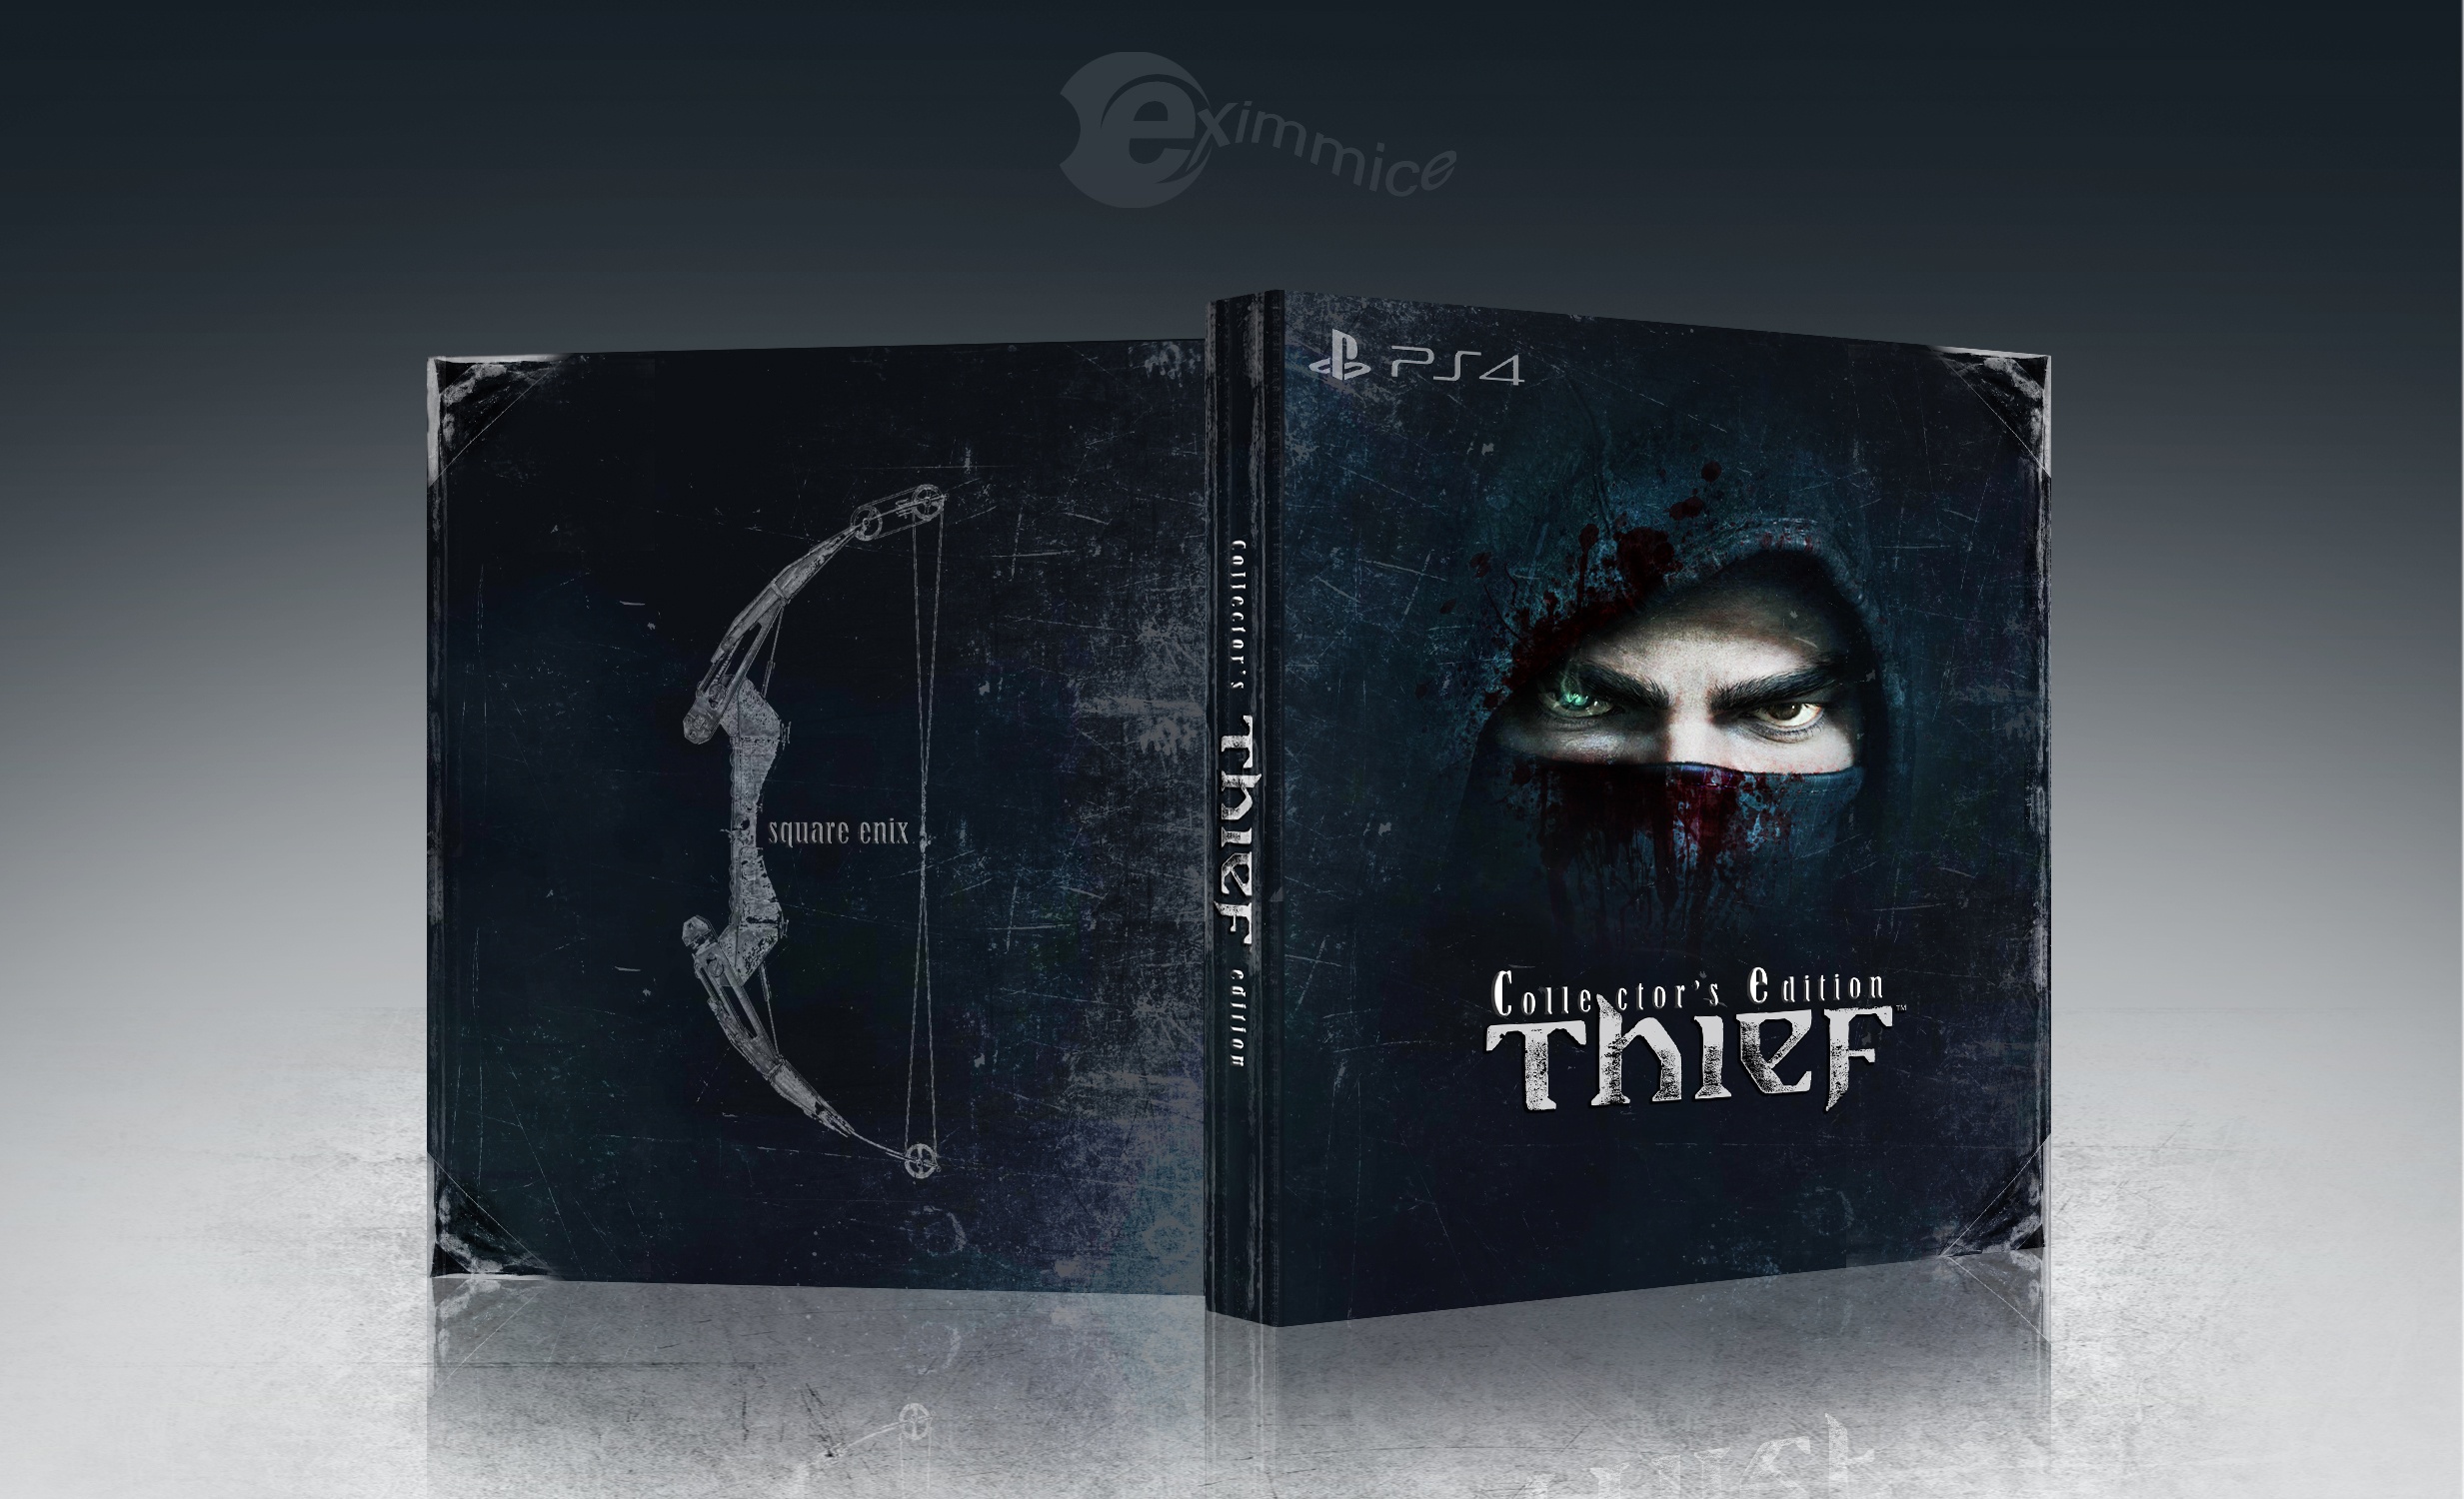 Thief box cover